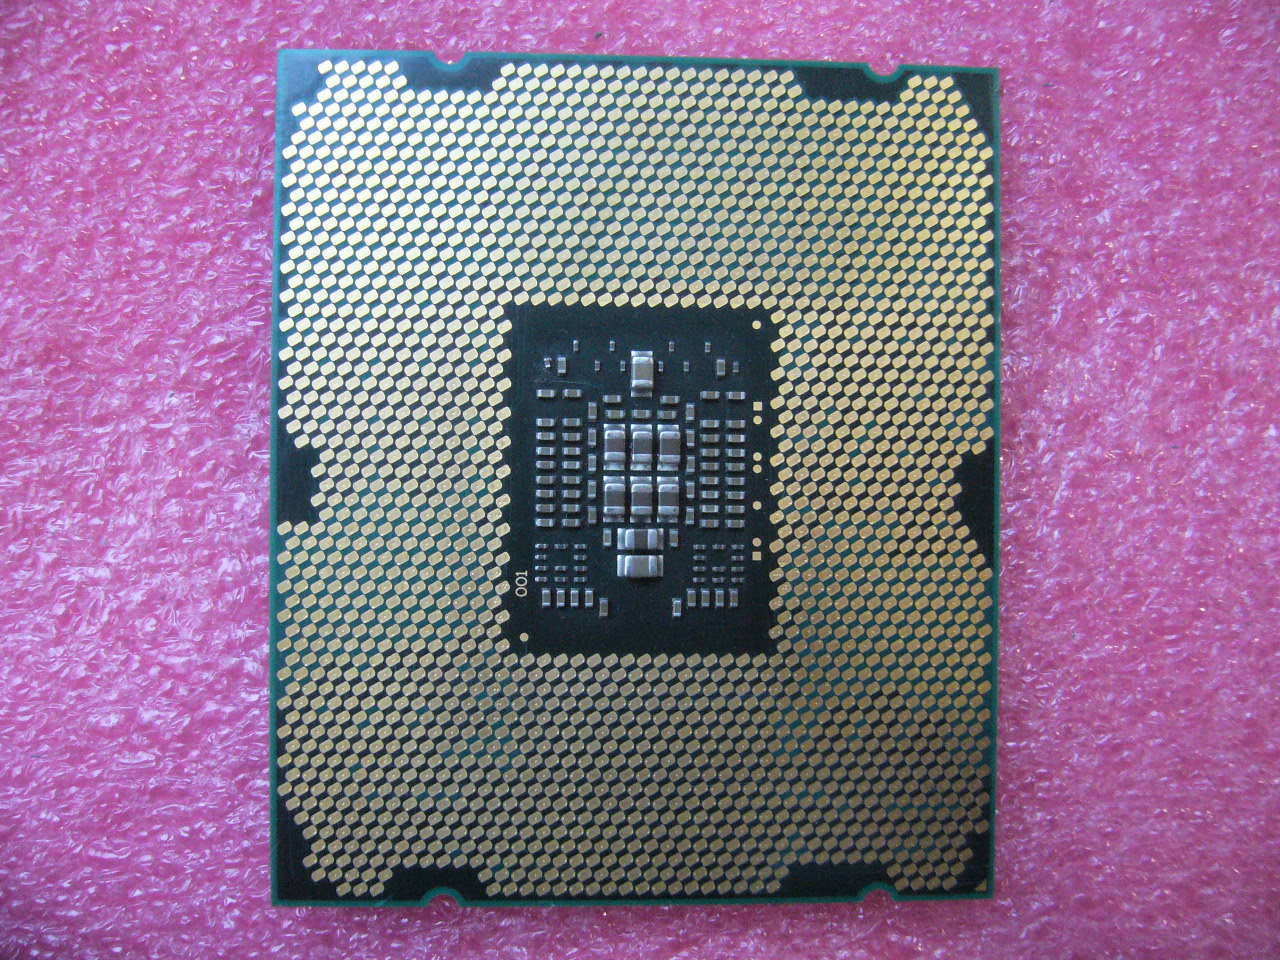 QTY 1x Intel CPU E5-2609 CPU 4-Cores 2.4Ghz LGA2011 SR0LA - Click Image to Close